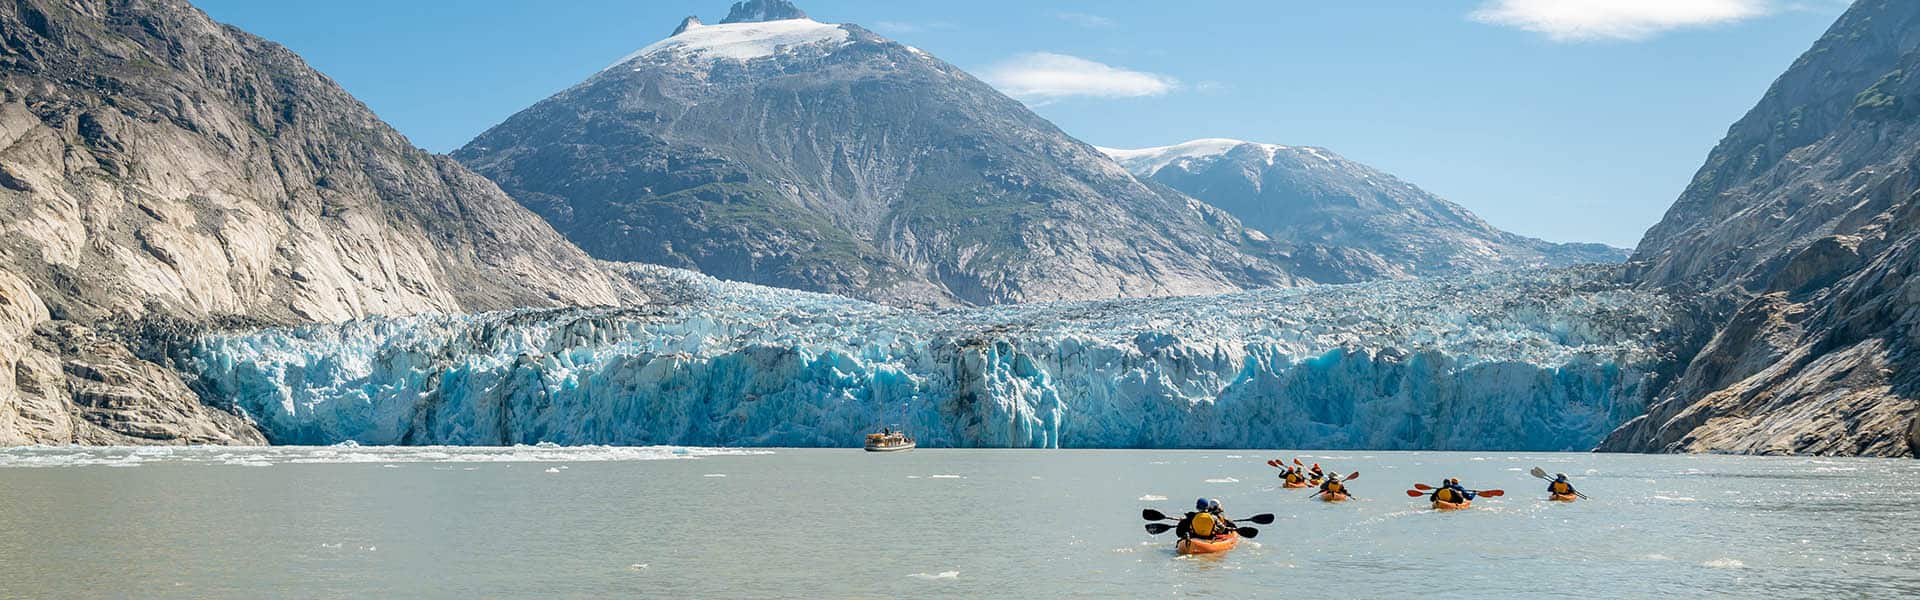 Alaska: Glacier Bay, Skagway & Juneau